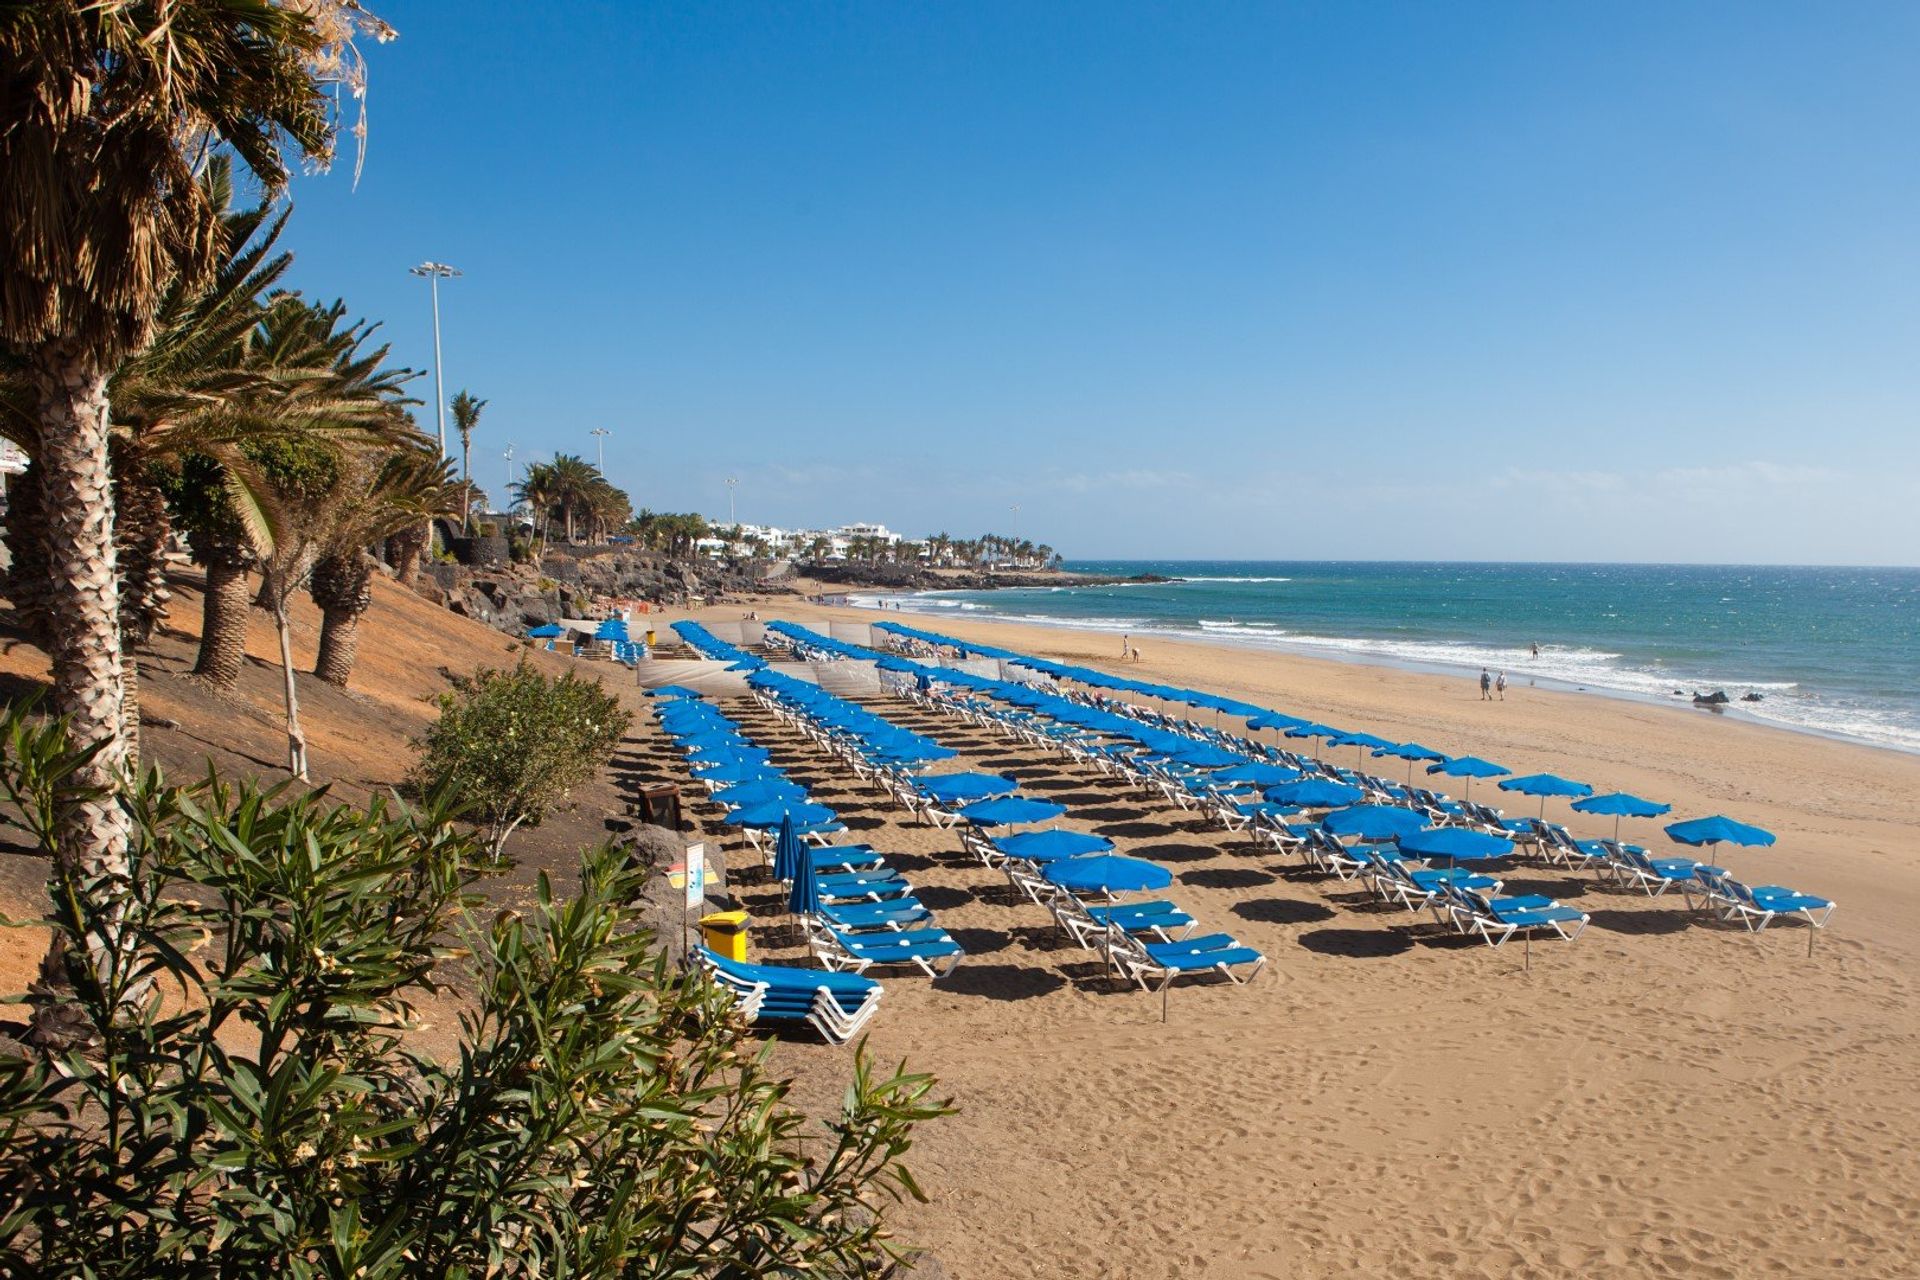 Find your slice of paradise on Puerto del Carmen's popular urban beach Playa Grande